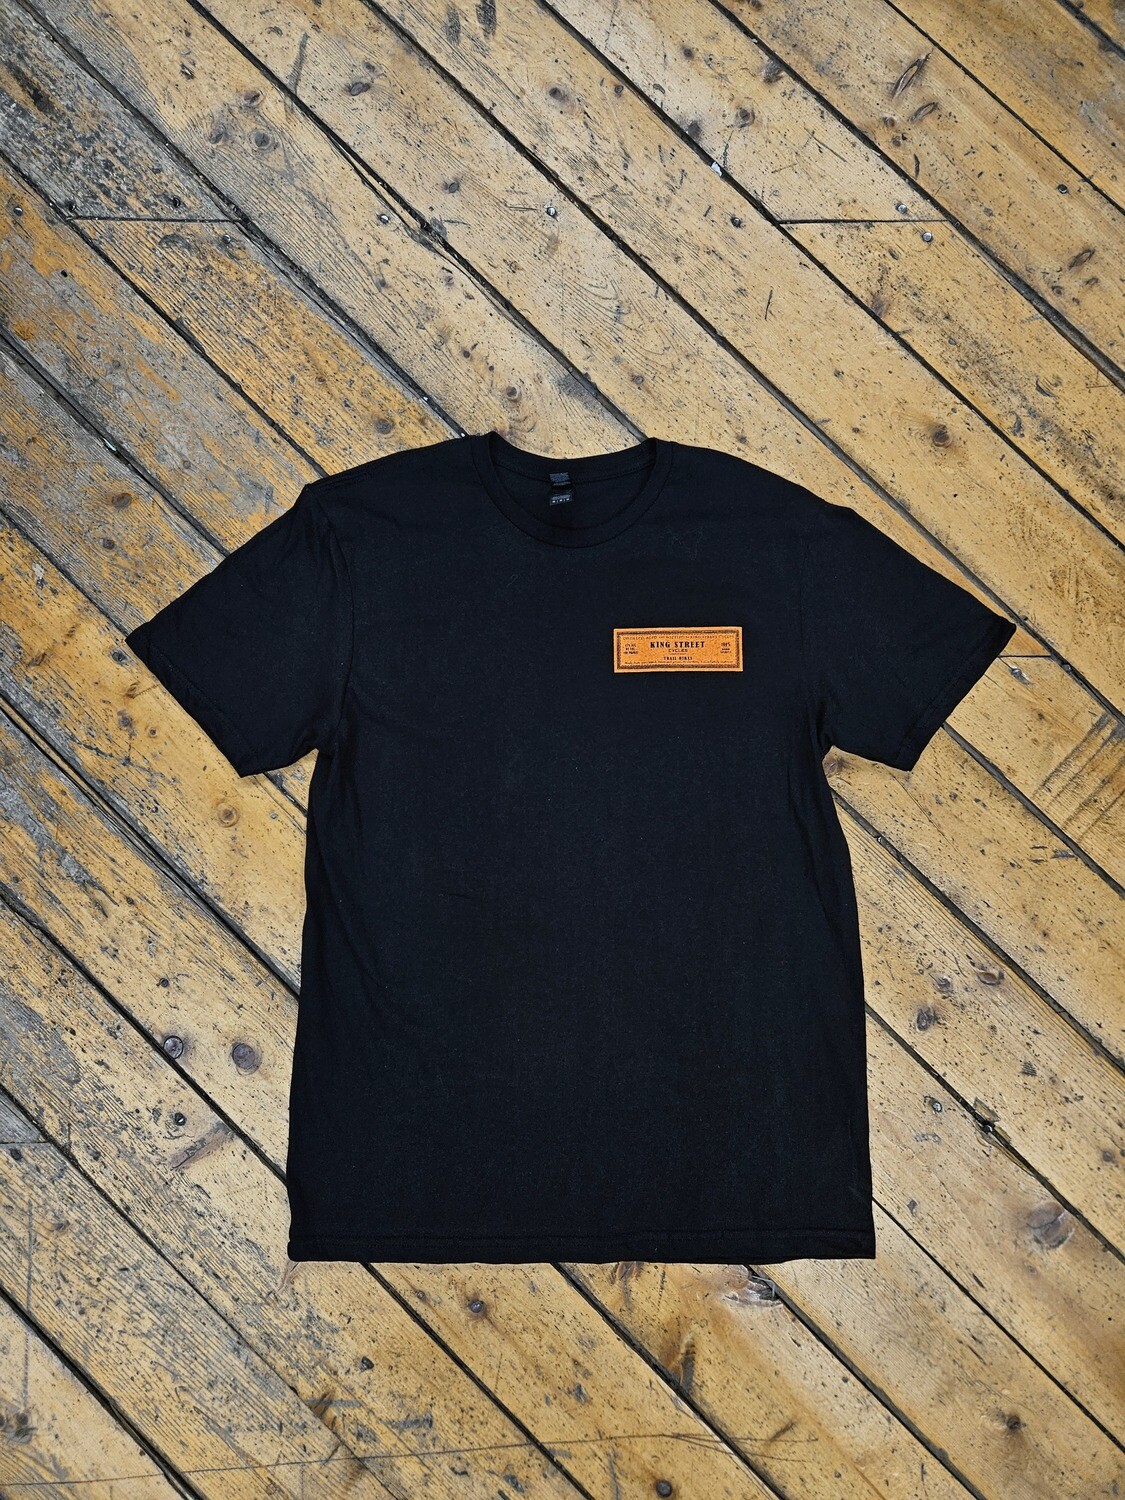 KSC Bourbon T-Shirt